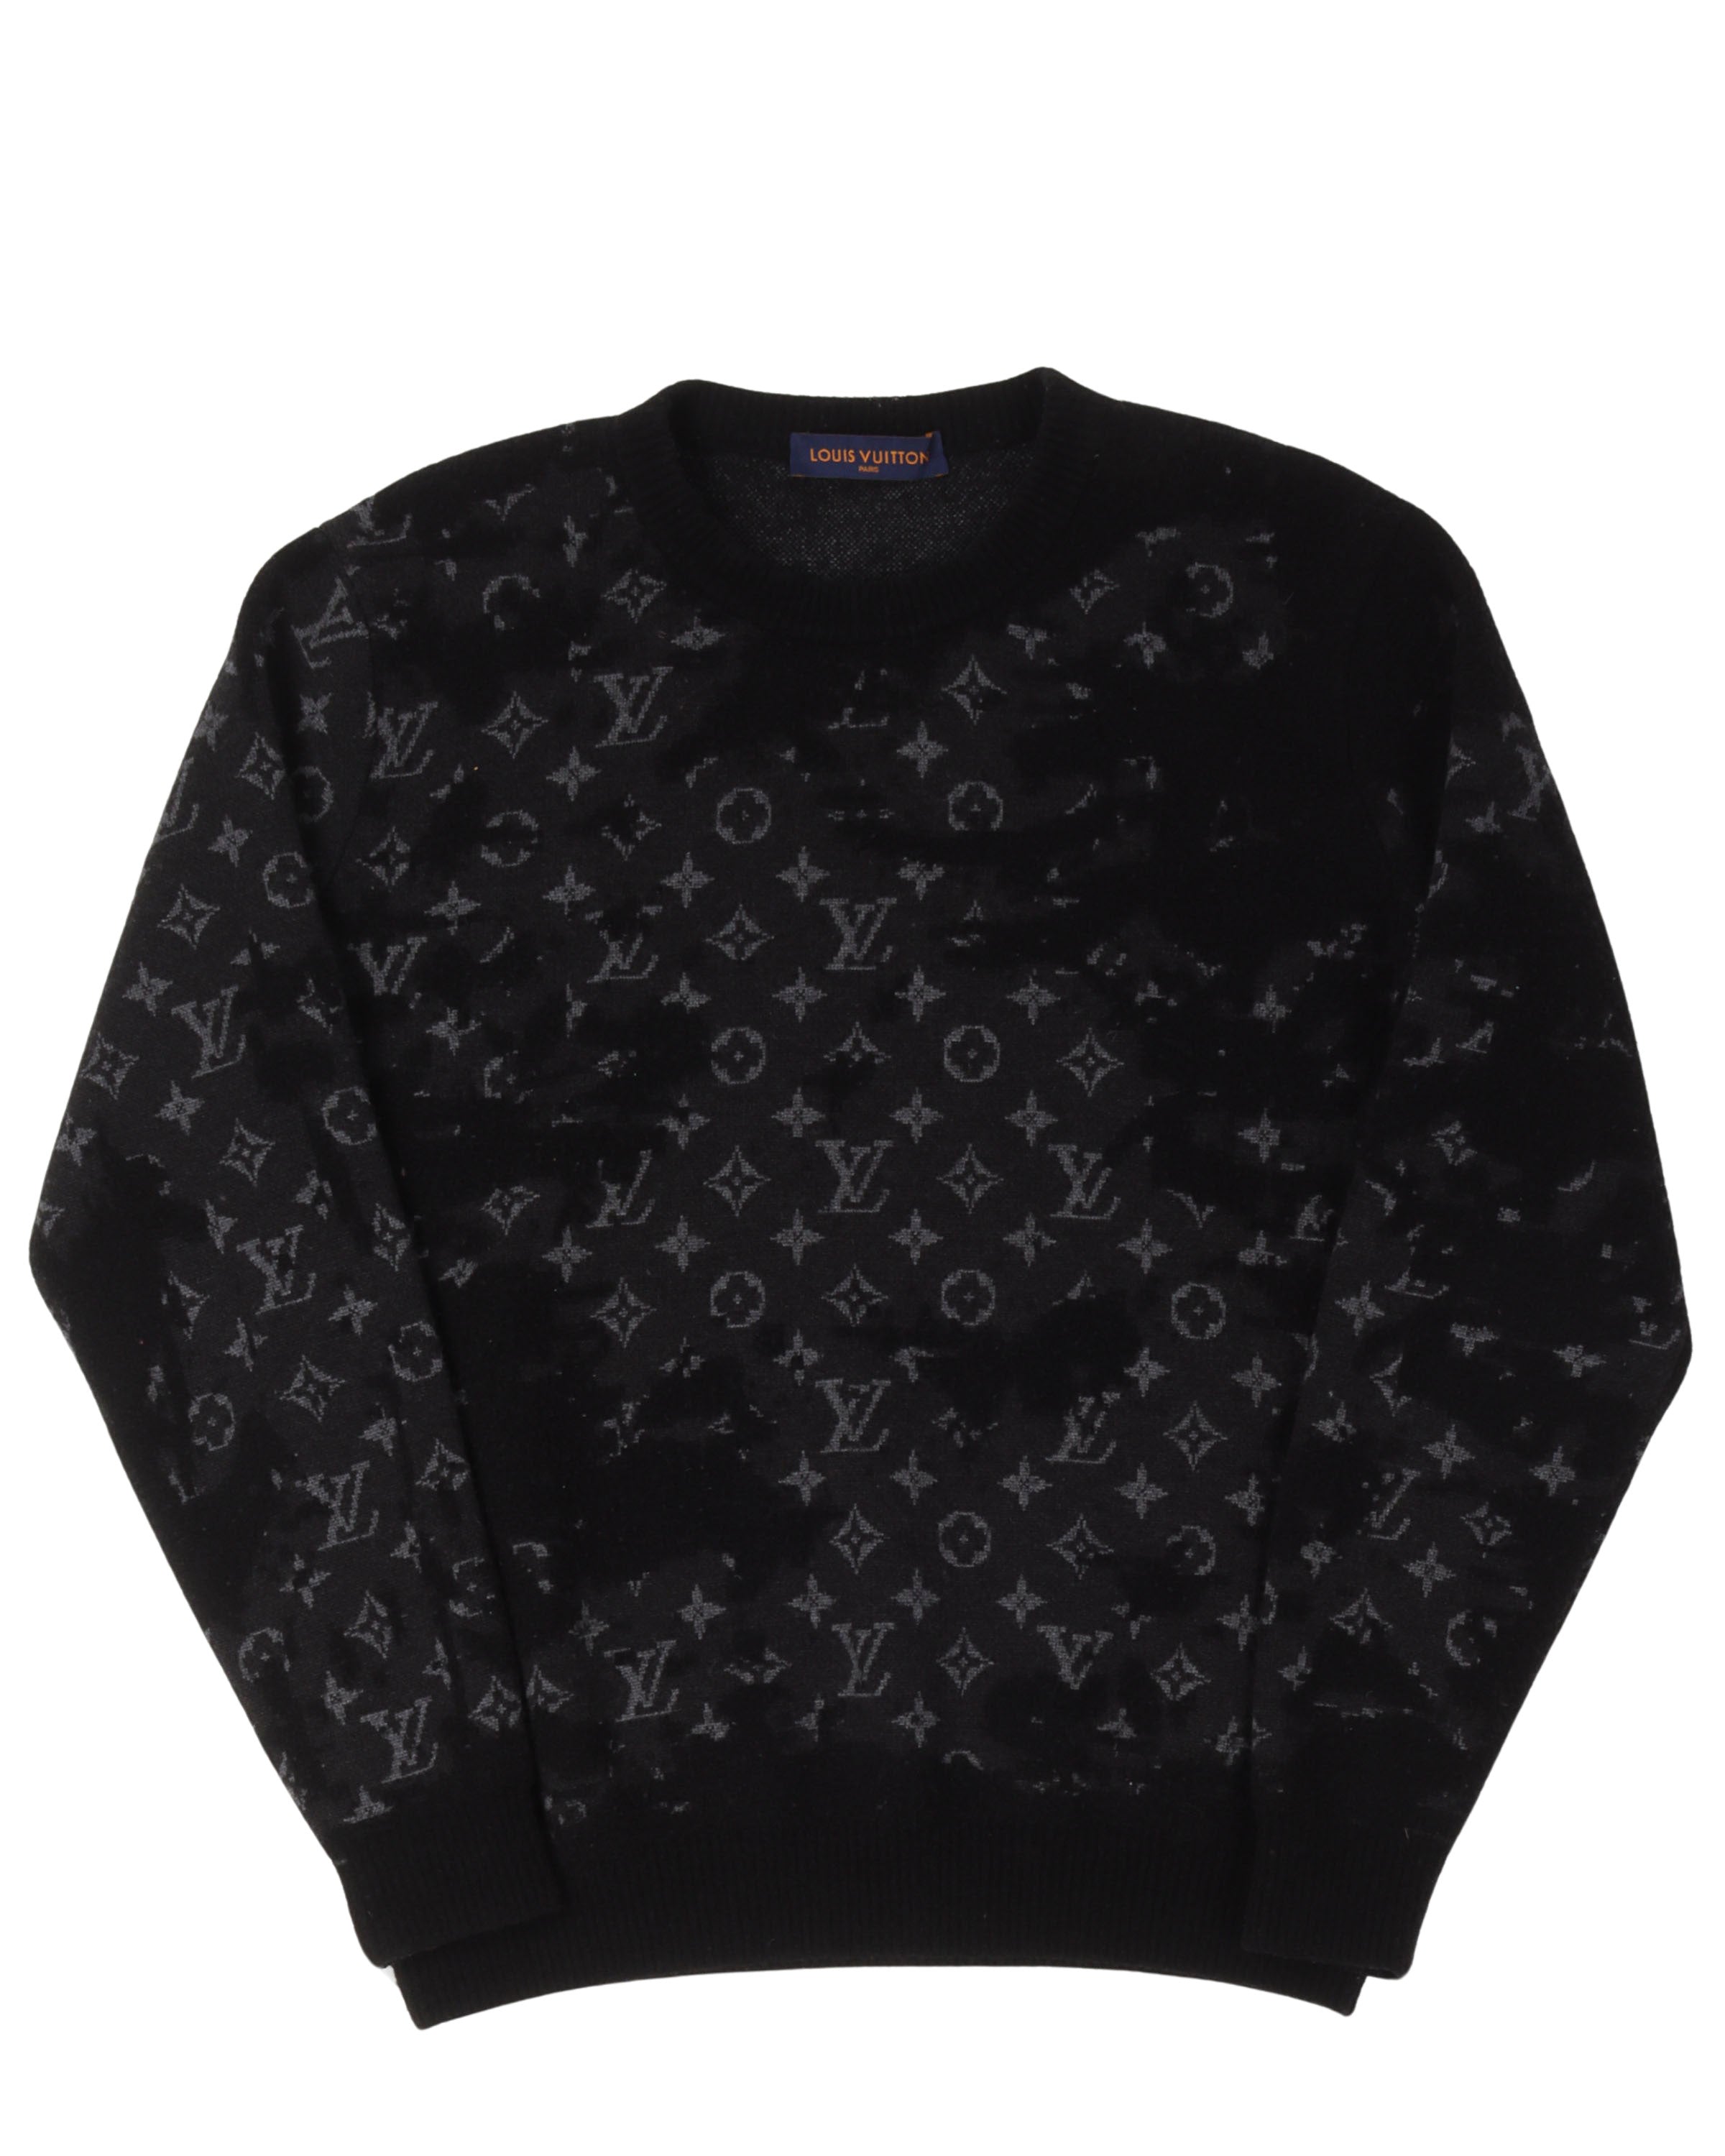 Louis Vuitton Monogram Jacquard Knit Sweater